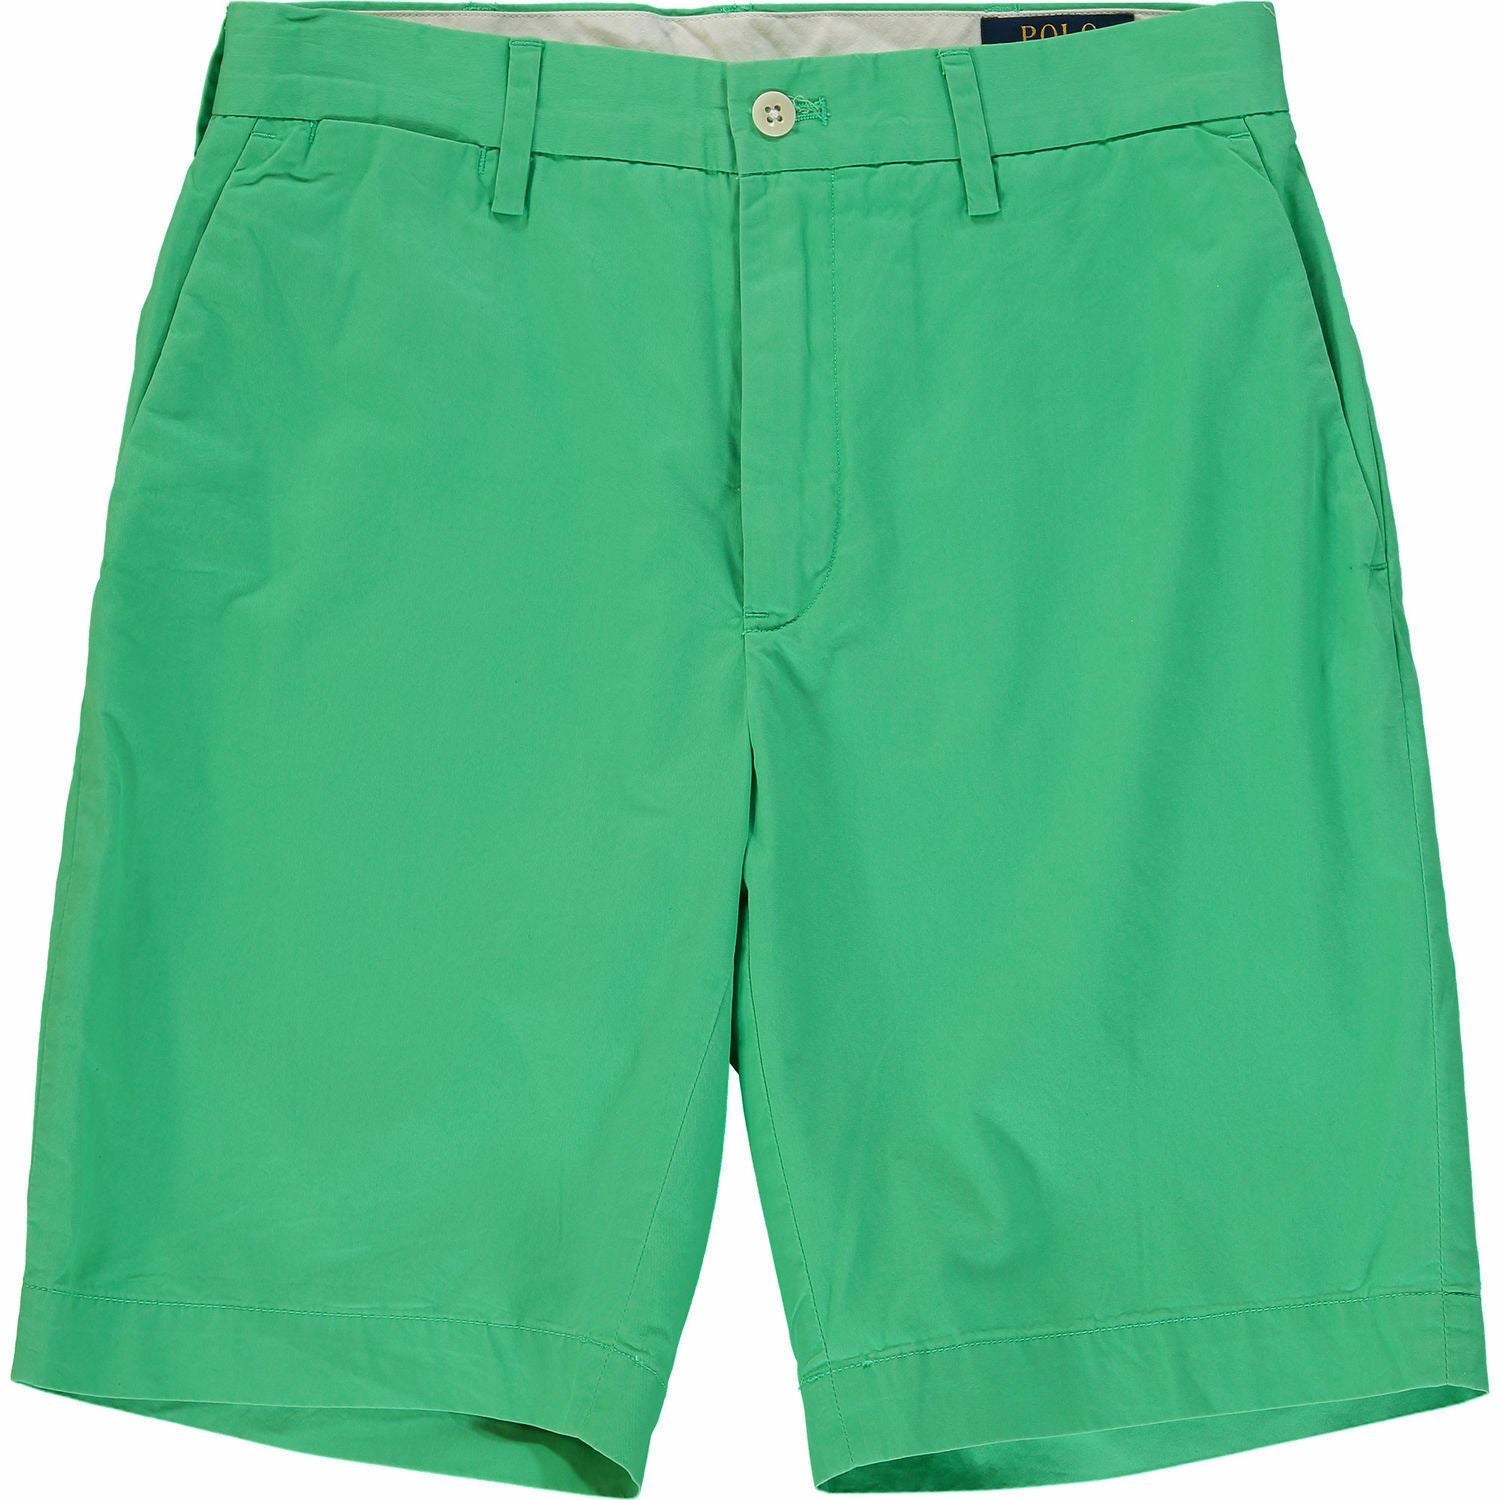 POLO RALPH LAUREN Men's Chino Shorts, Grass Green, W28